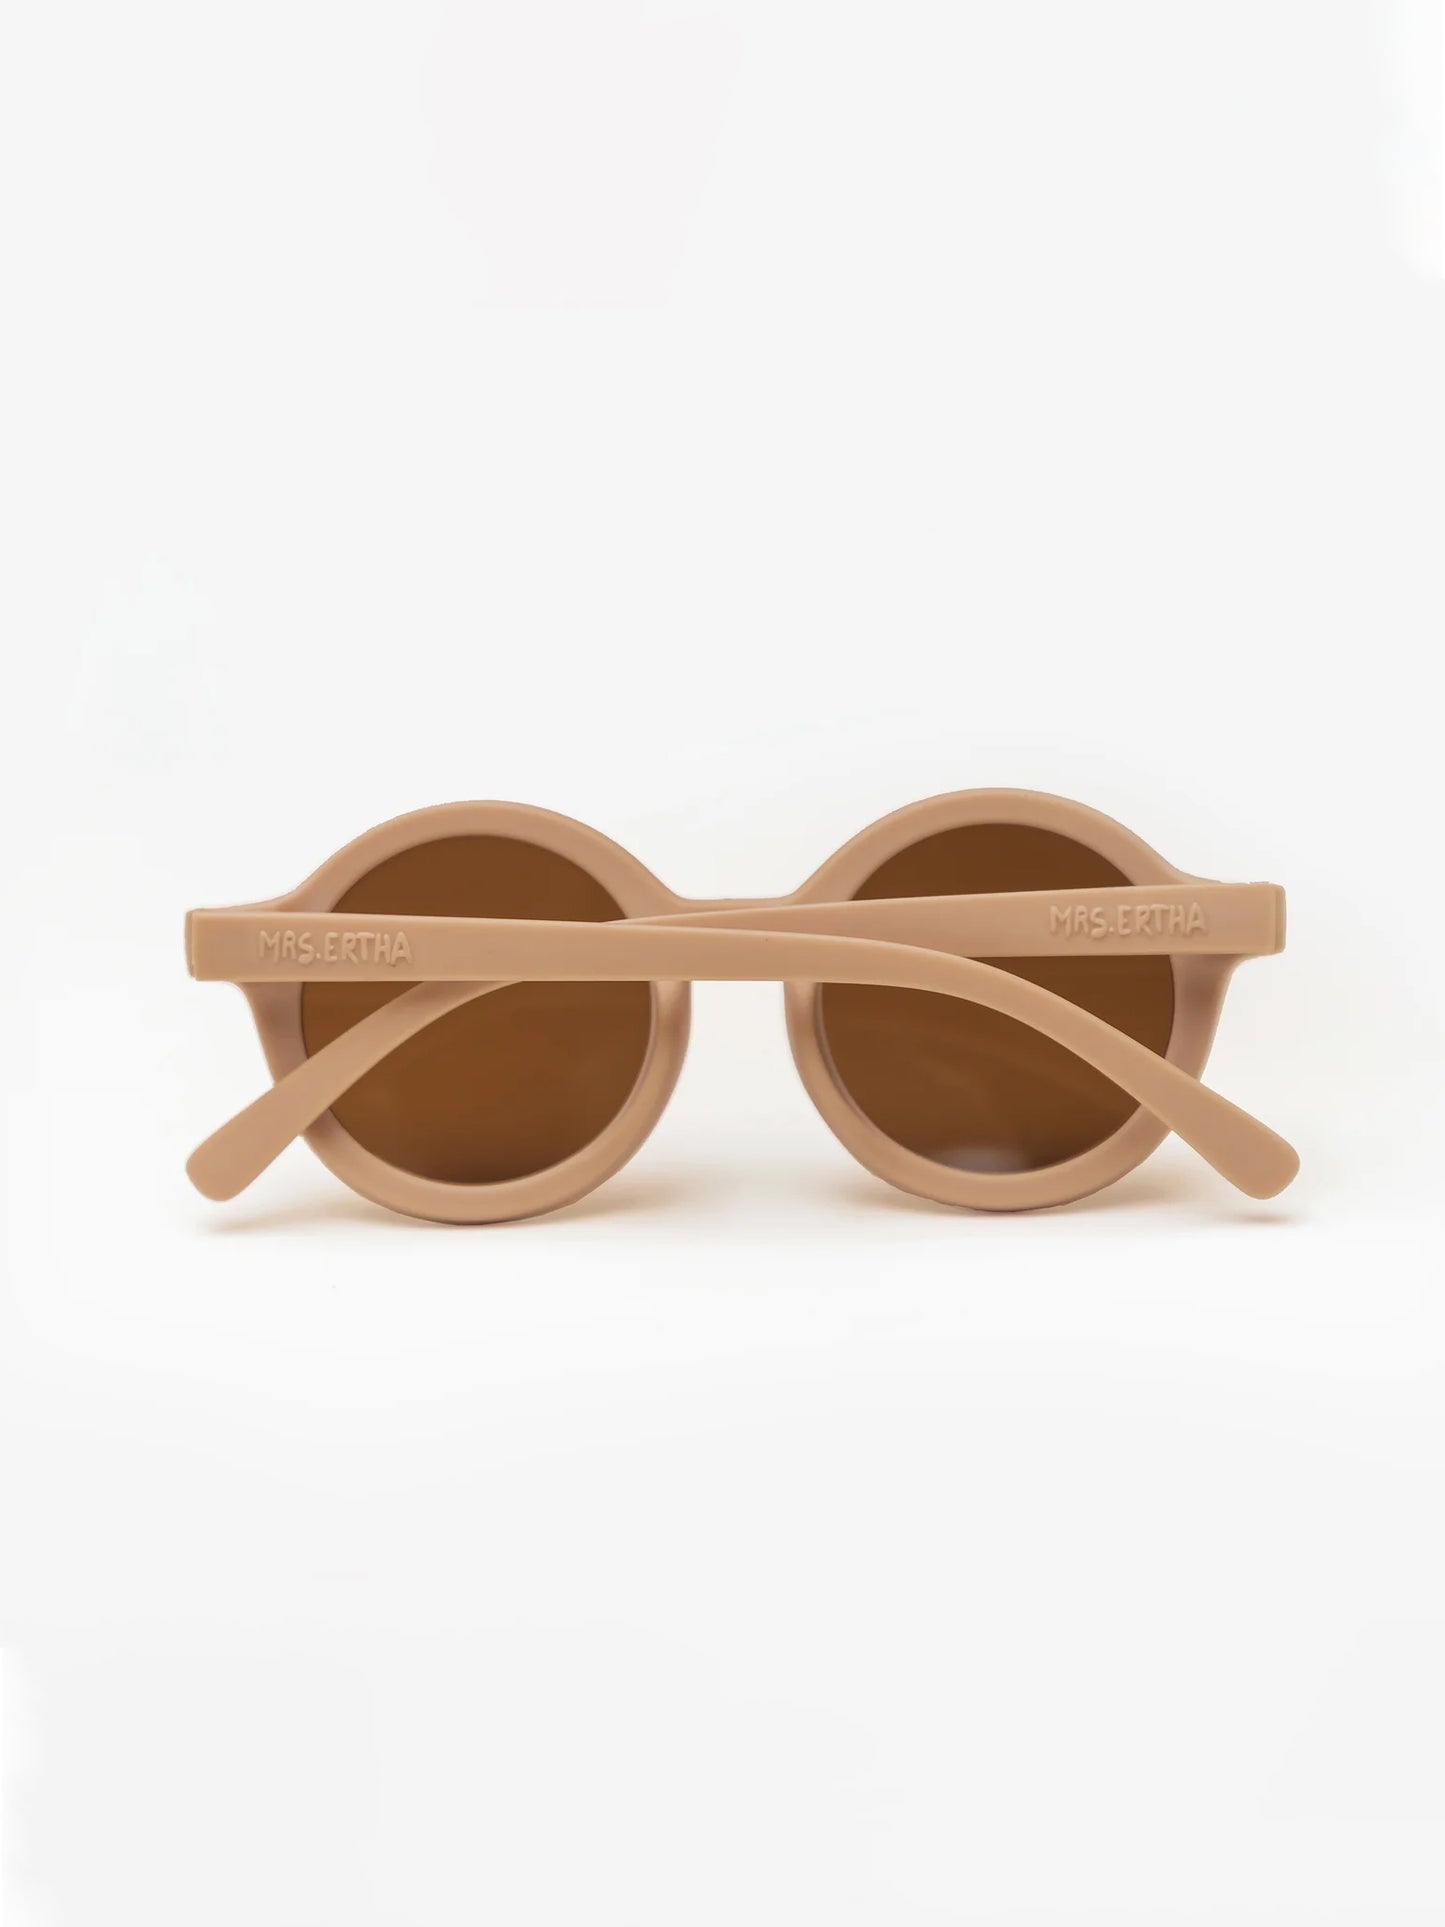 Latte Recycled Plastic Kids Sunglasses